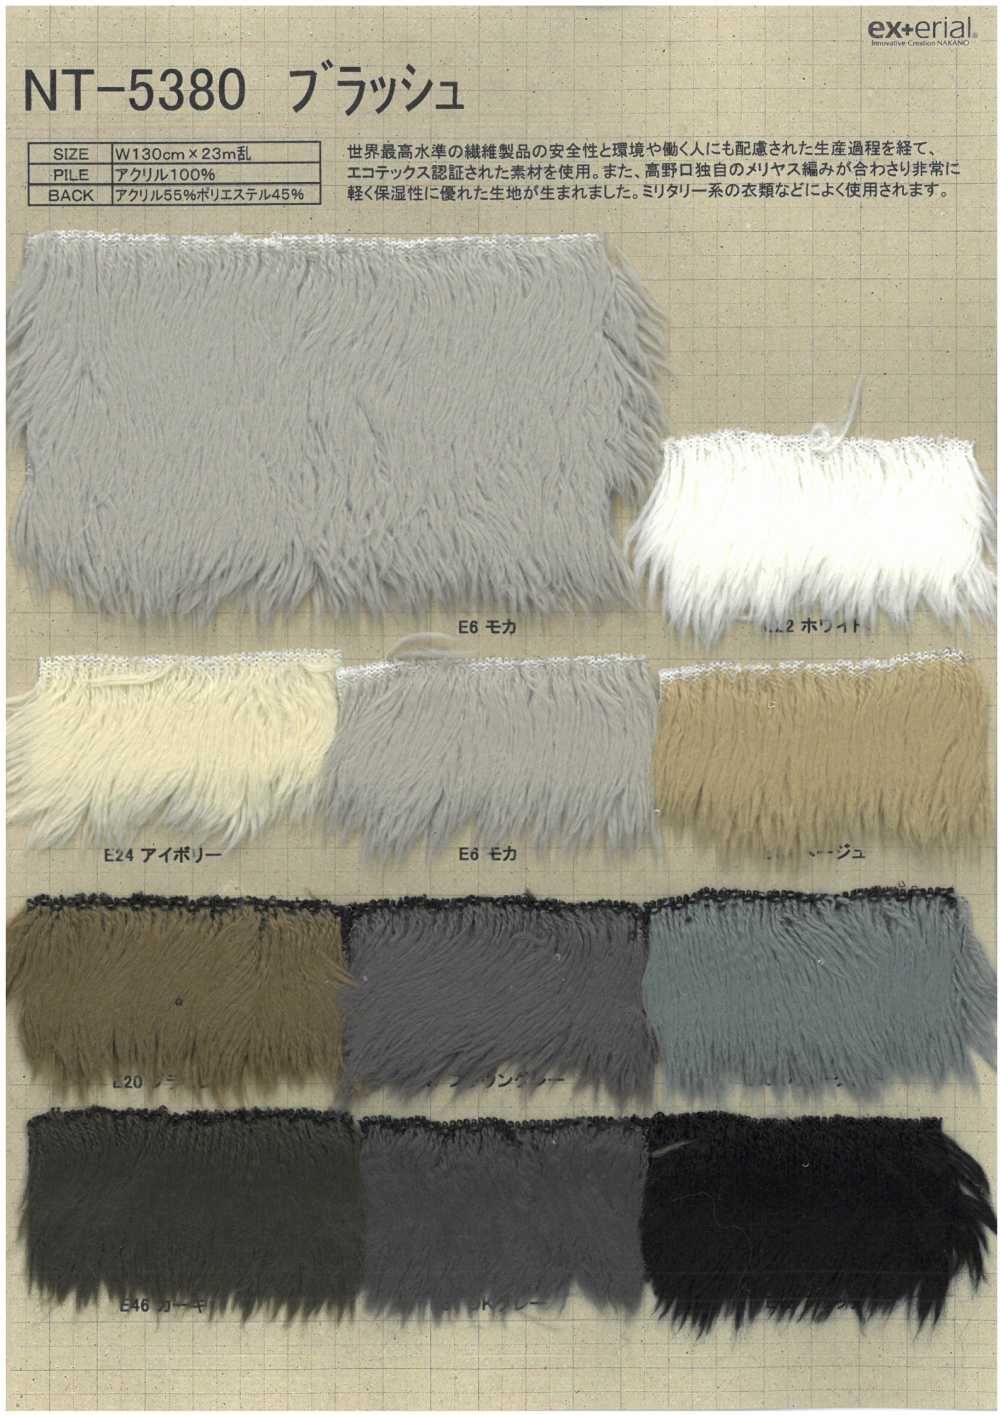 NT-5380 Pele Artesanal [pincel][Têxtil / Tecido] Indústria De Meias Nakano